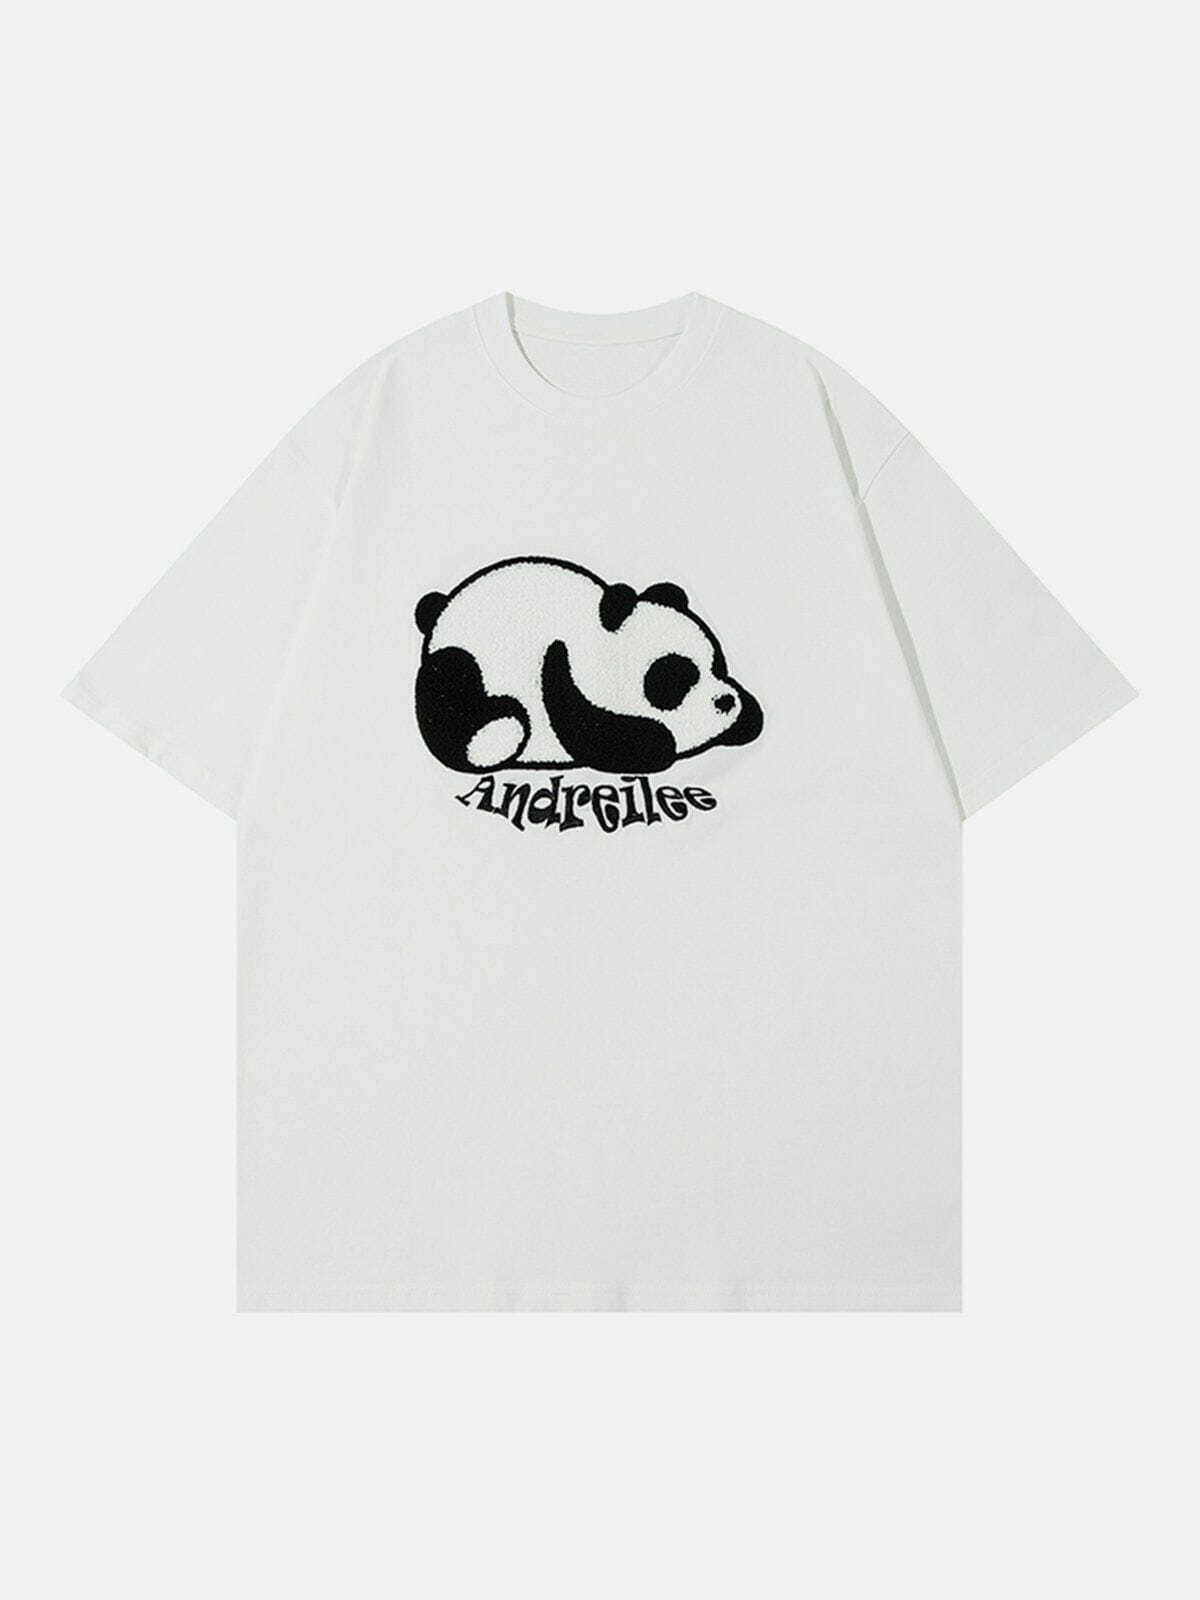 panda print towel embroidered tee quirky urban fashion statement 8108